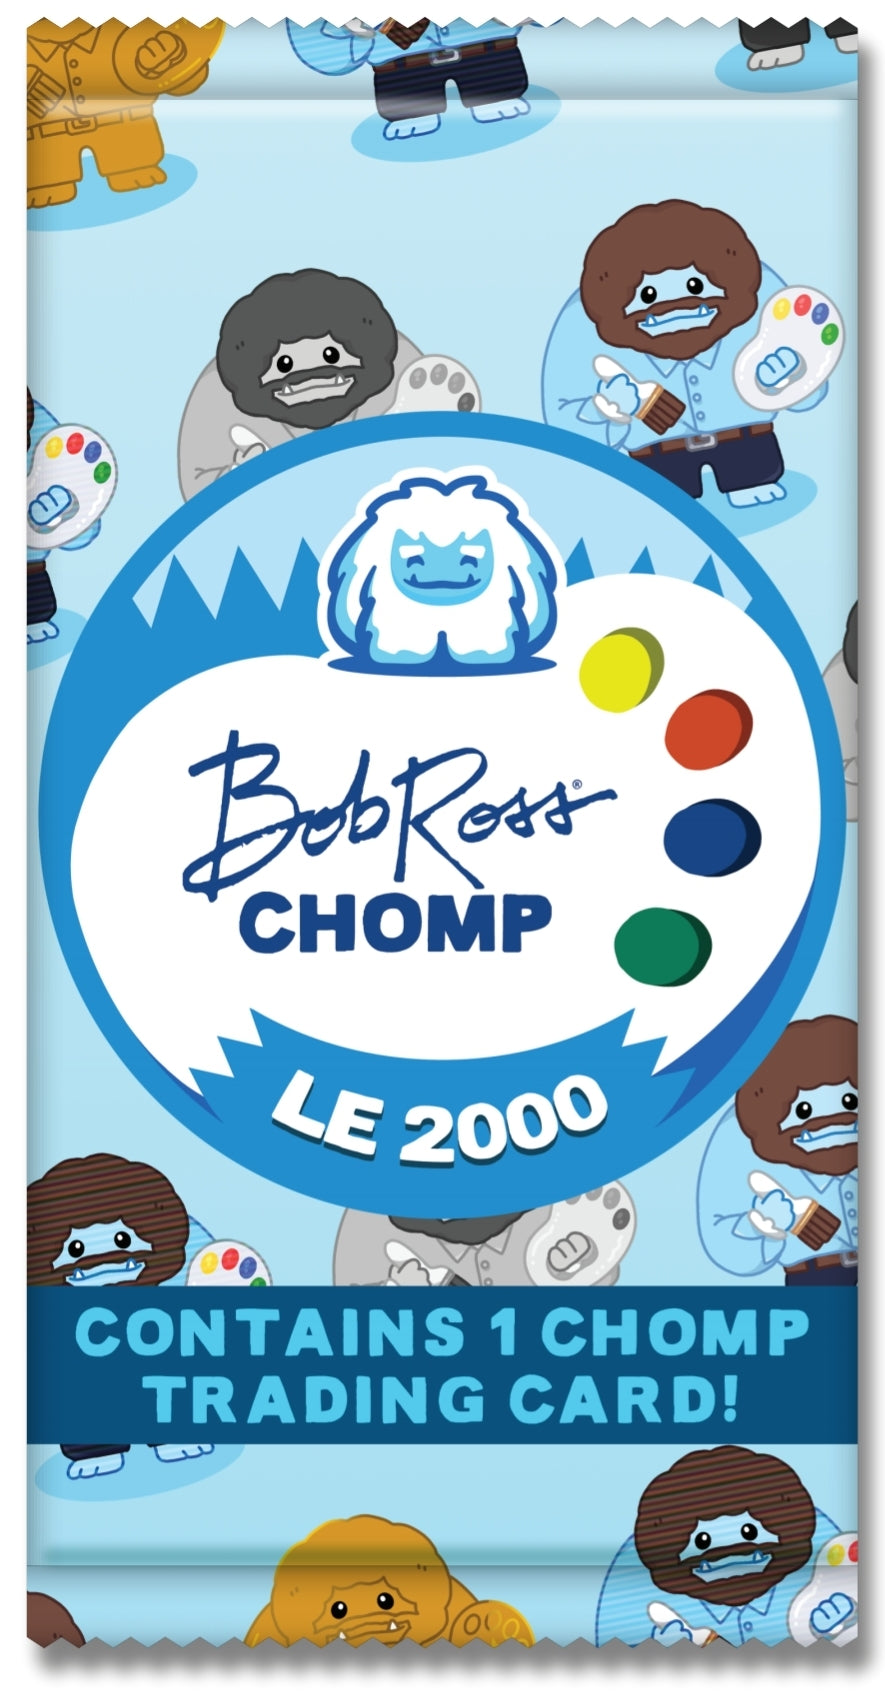 Bob Ross Chomp Trading Card (FREE w/BOB ROSS CHOMP FIGURE PURCHASE, NOT FOR SALE)